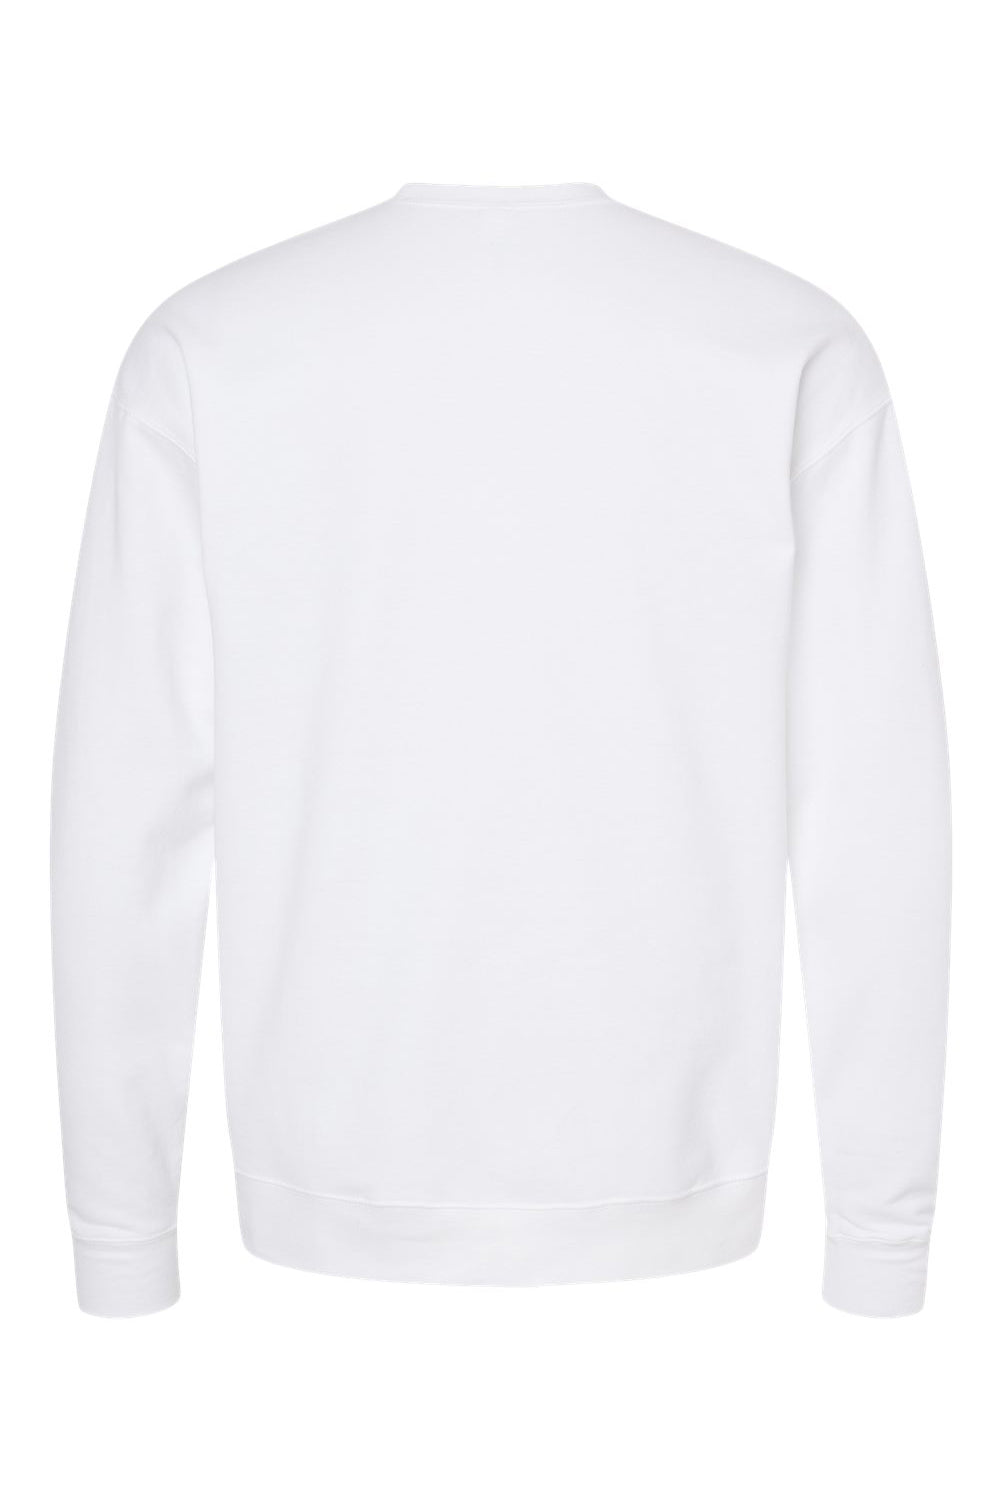 Tultex 340 Mens Fleece Crewneck Sweatshirt White Flat Back